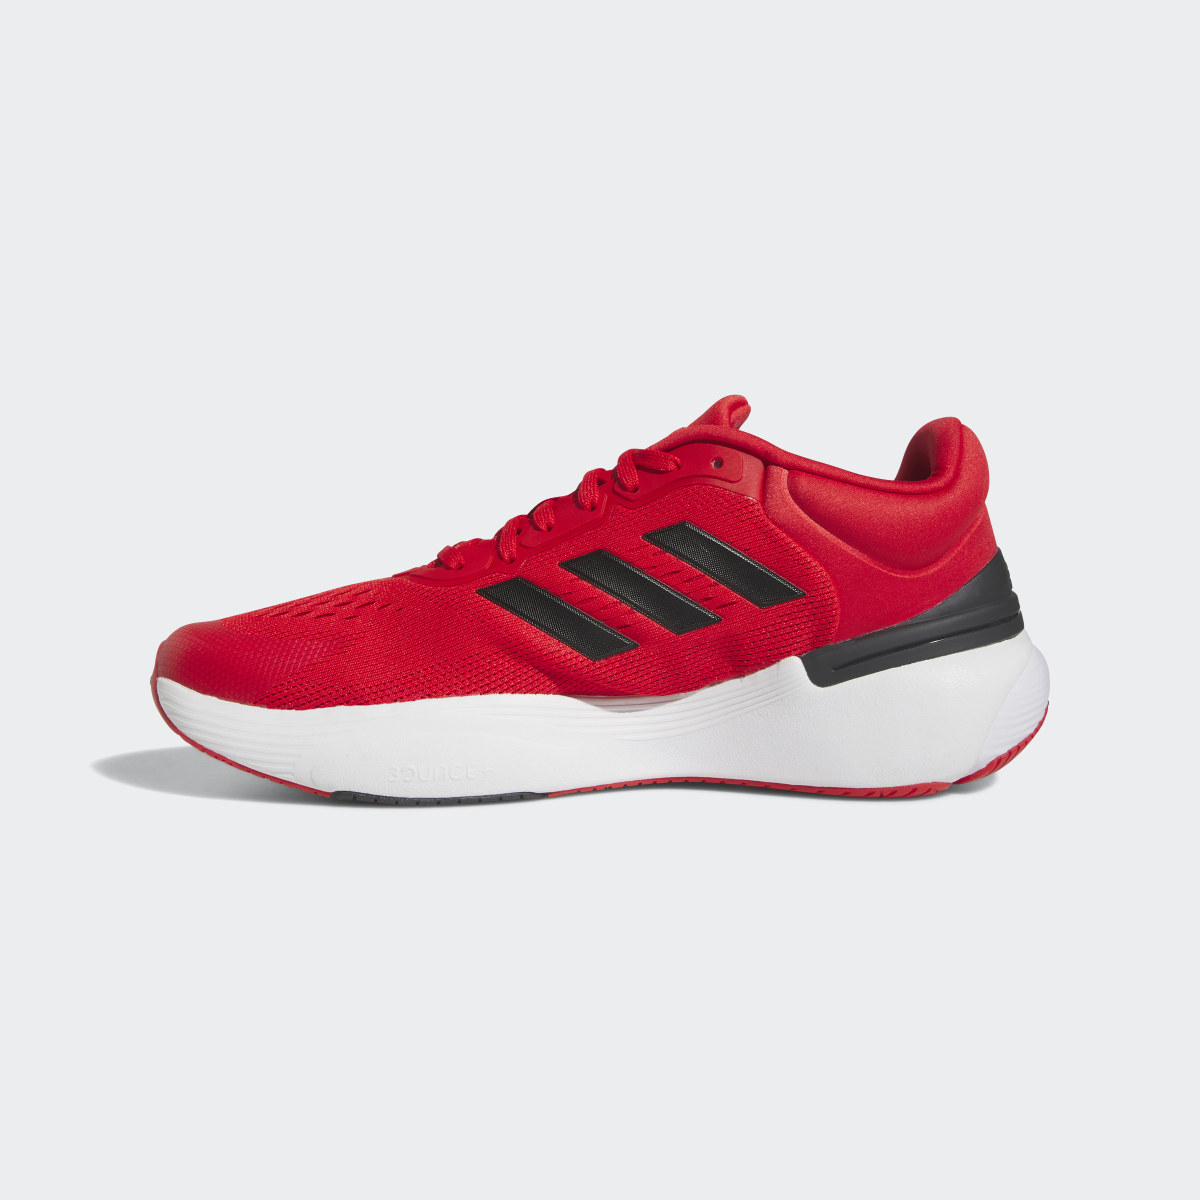 Adidas Response Super 3.0 Running Shoes. 7